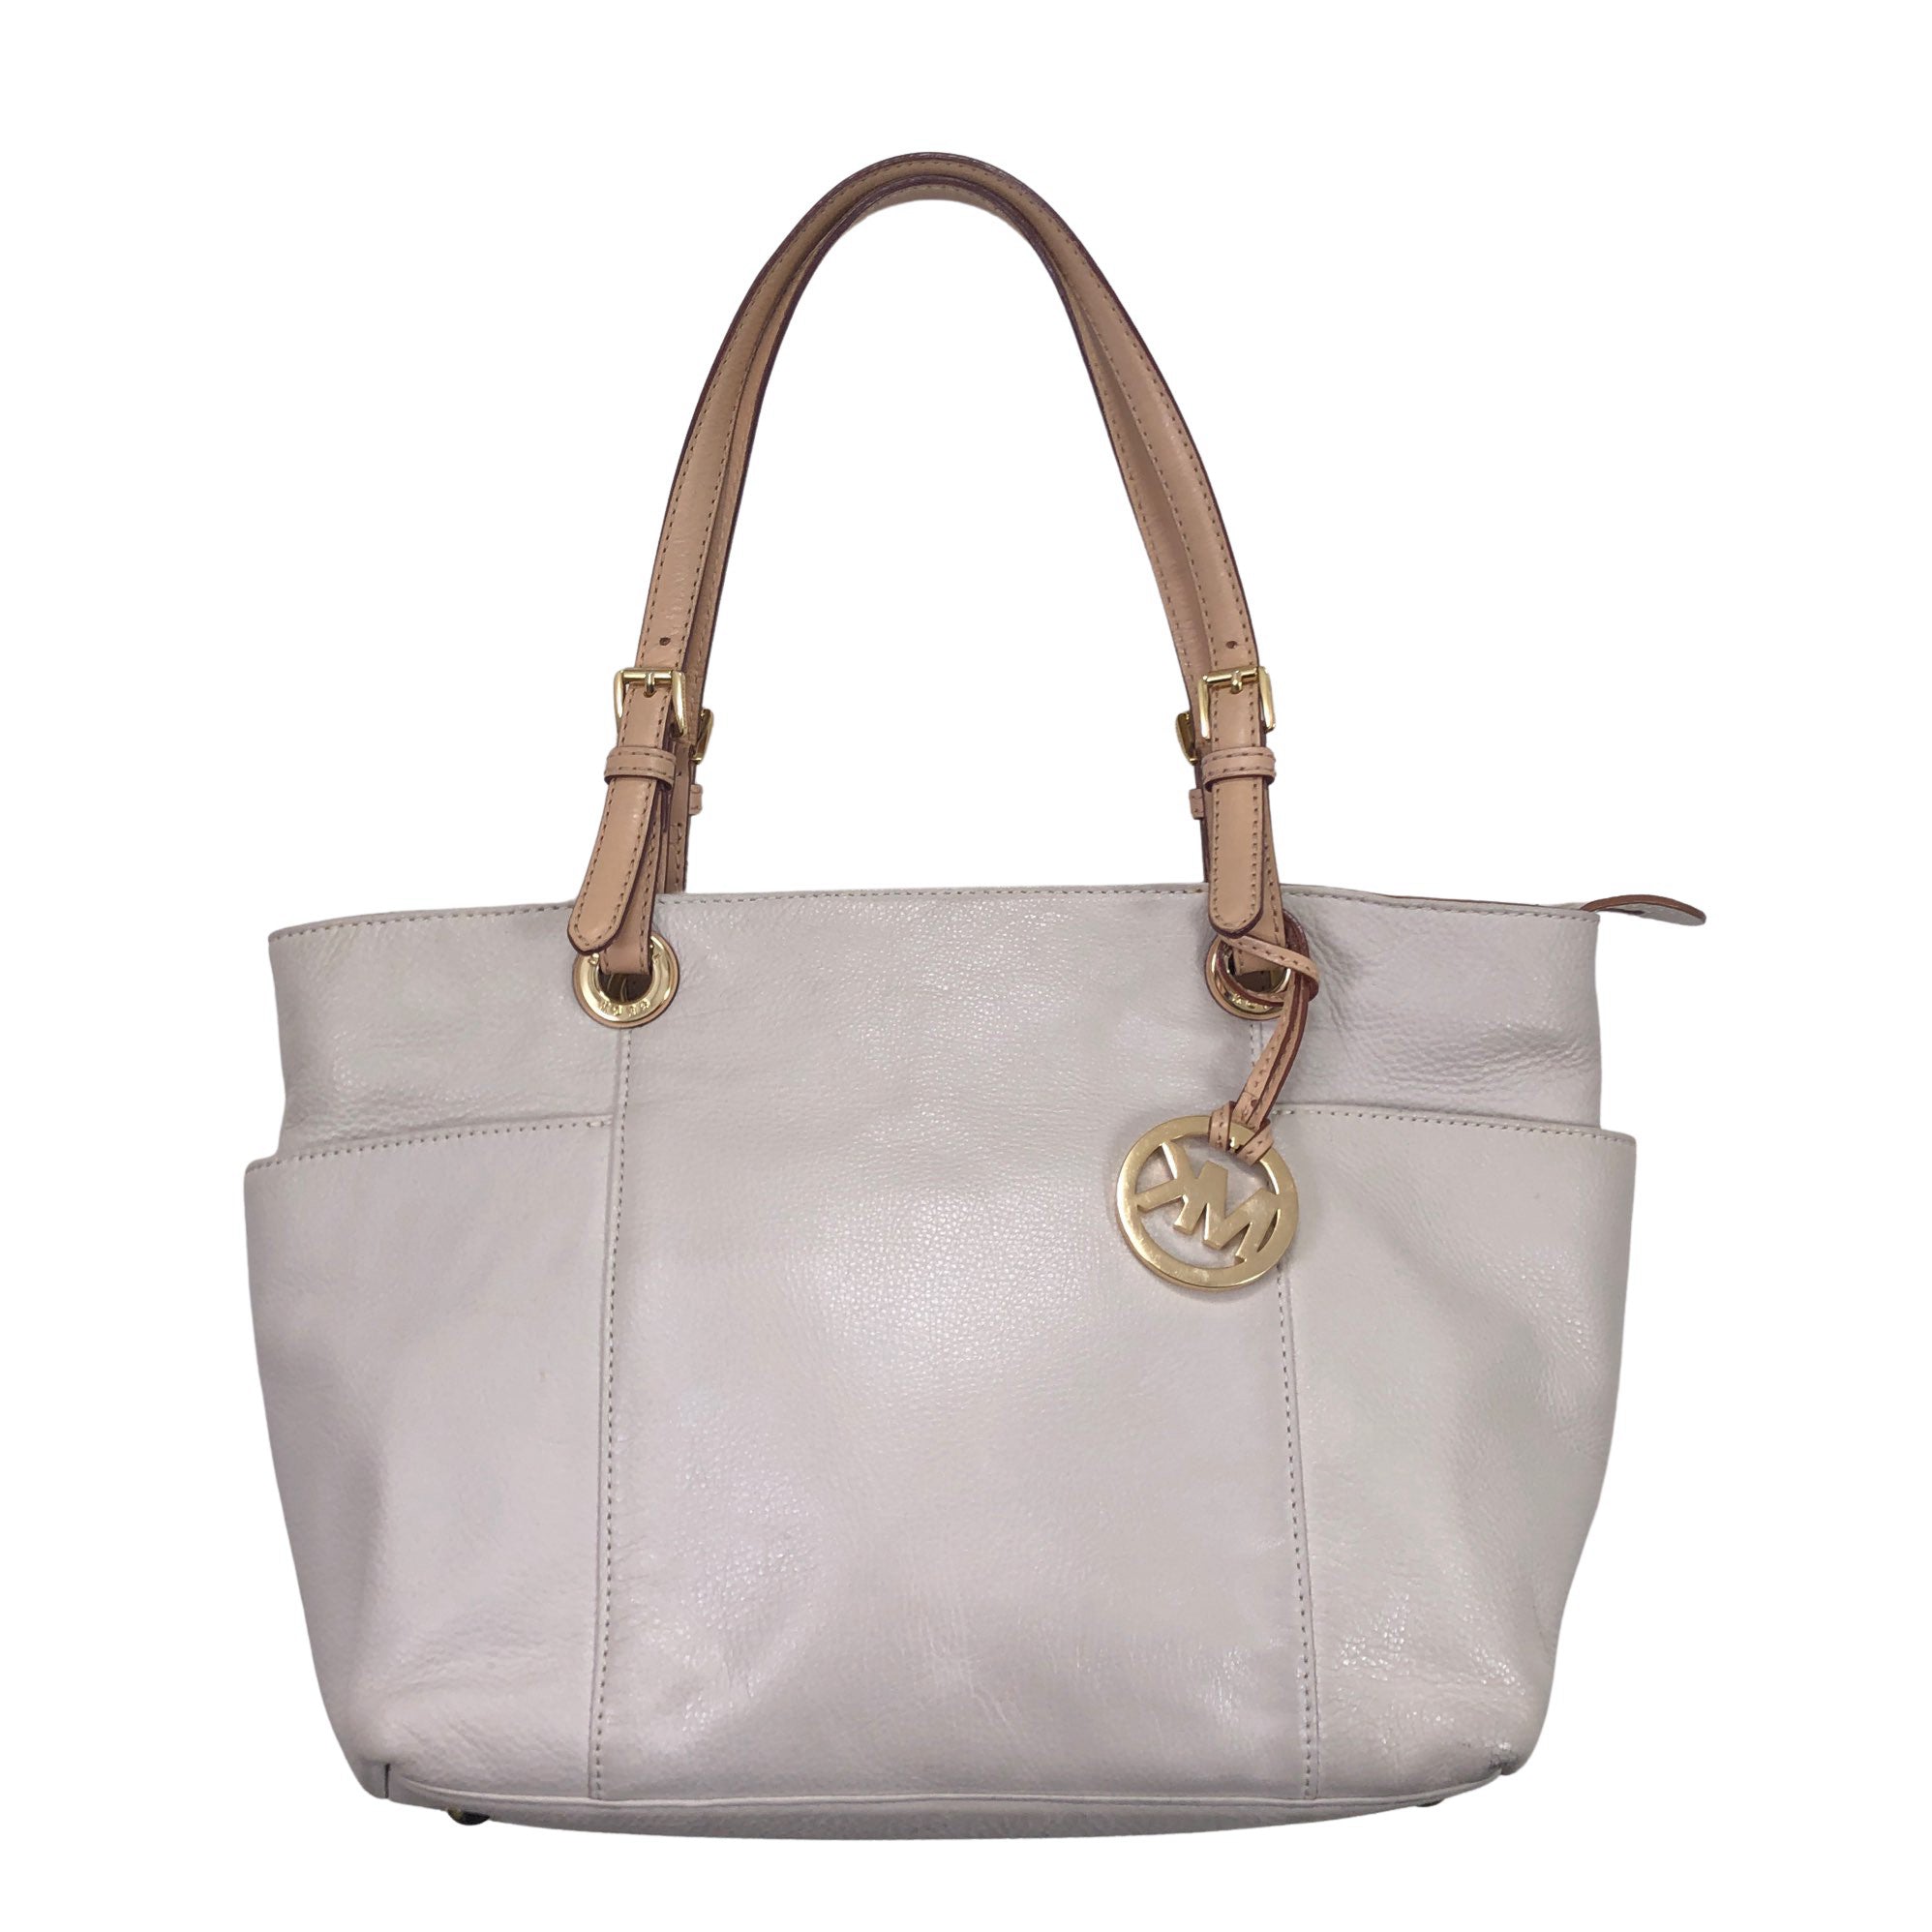 Women's Michael Kors Handbag, size Midi (Beige) | Emmy